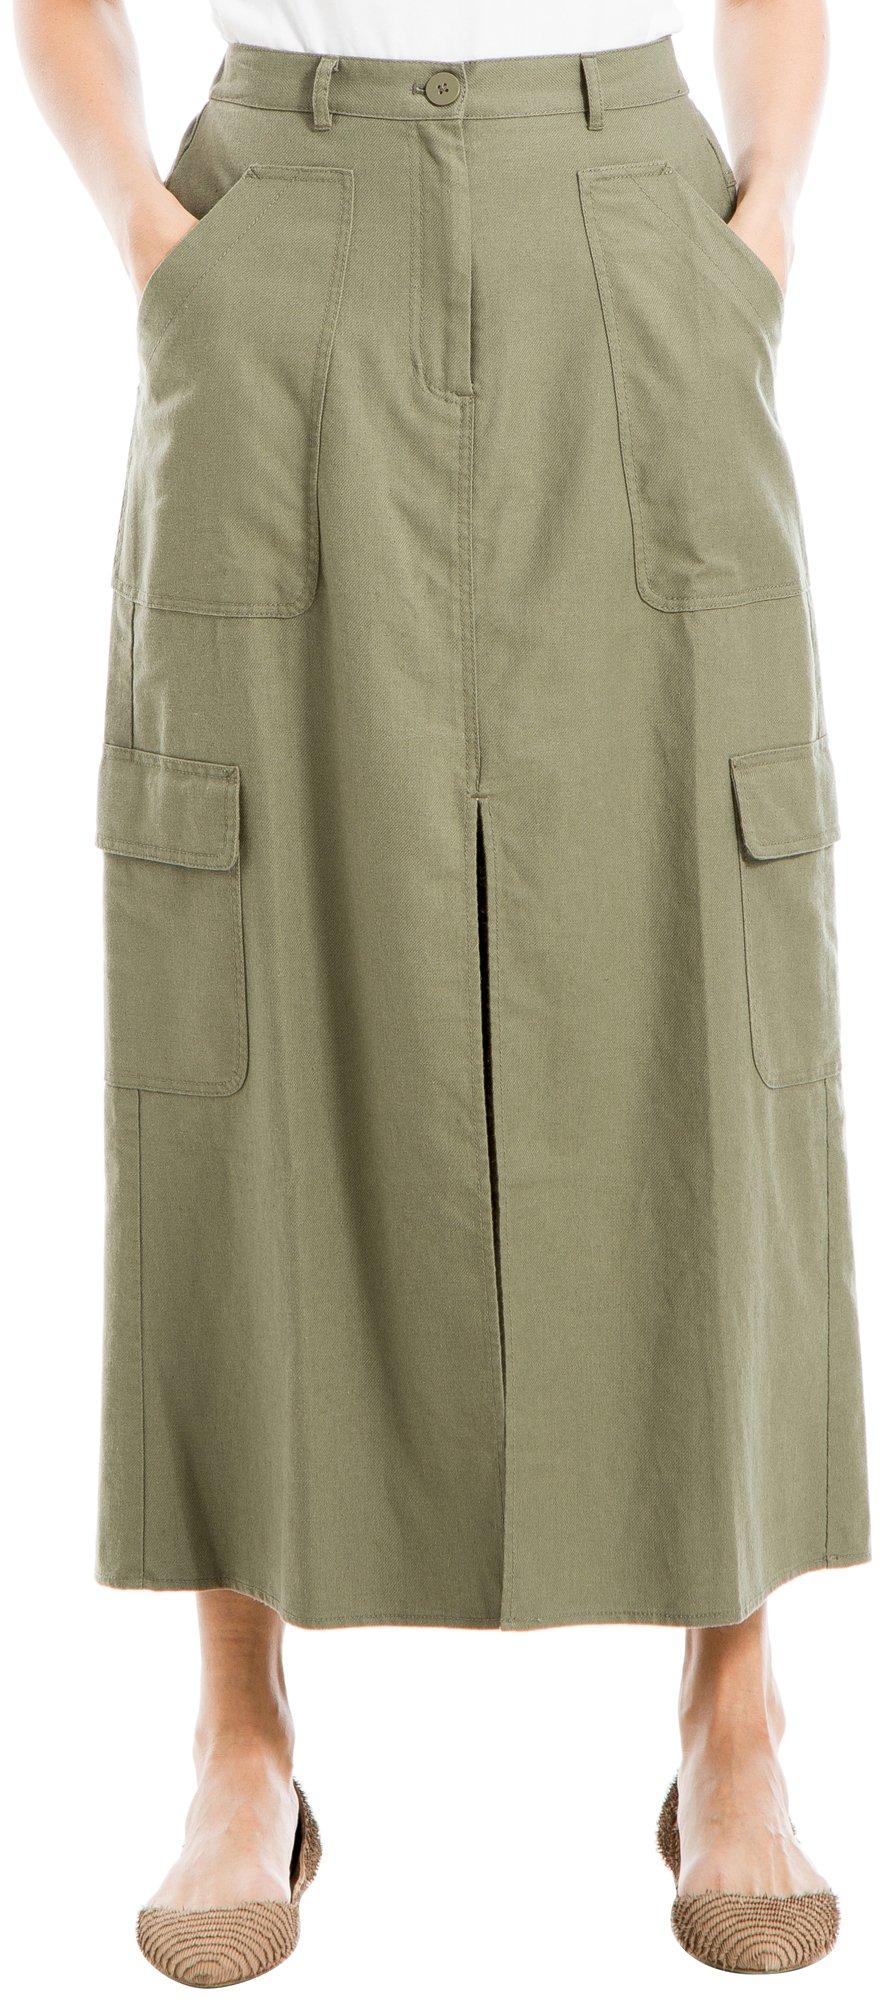 Max Studio Womens A-Line Skirt